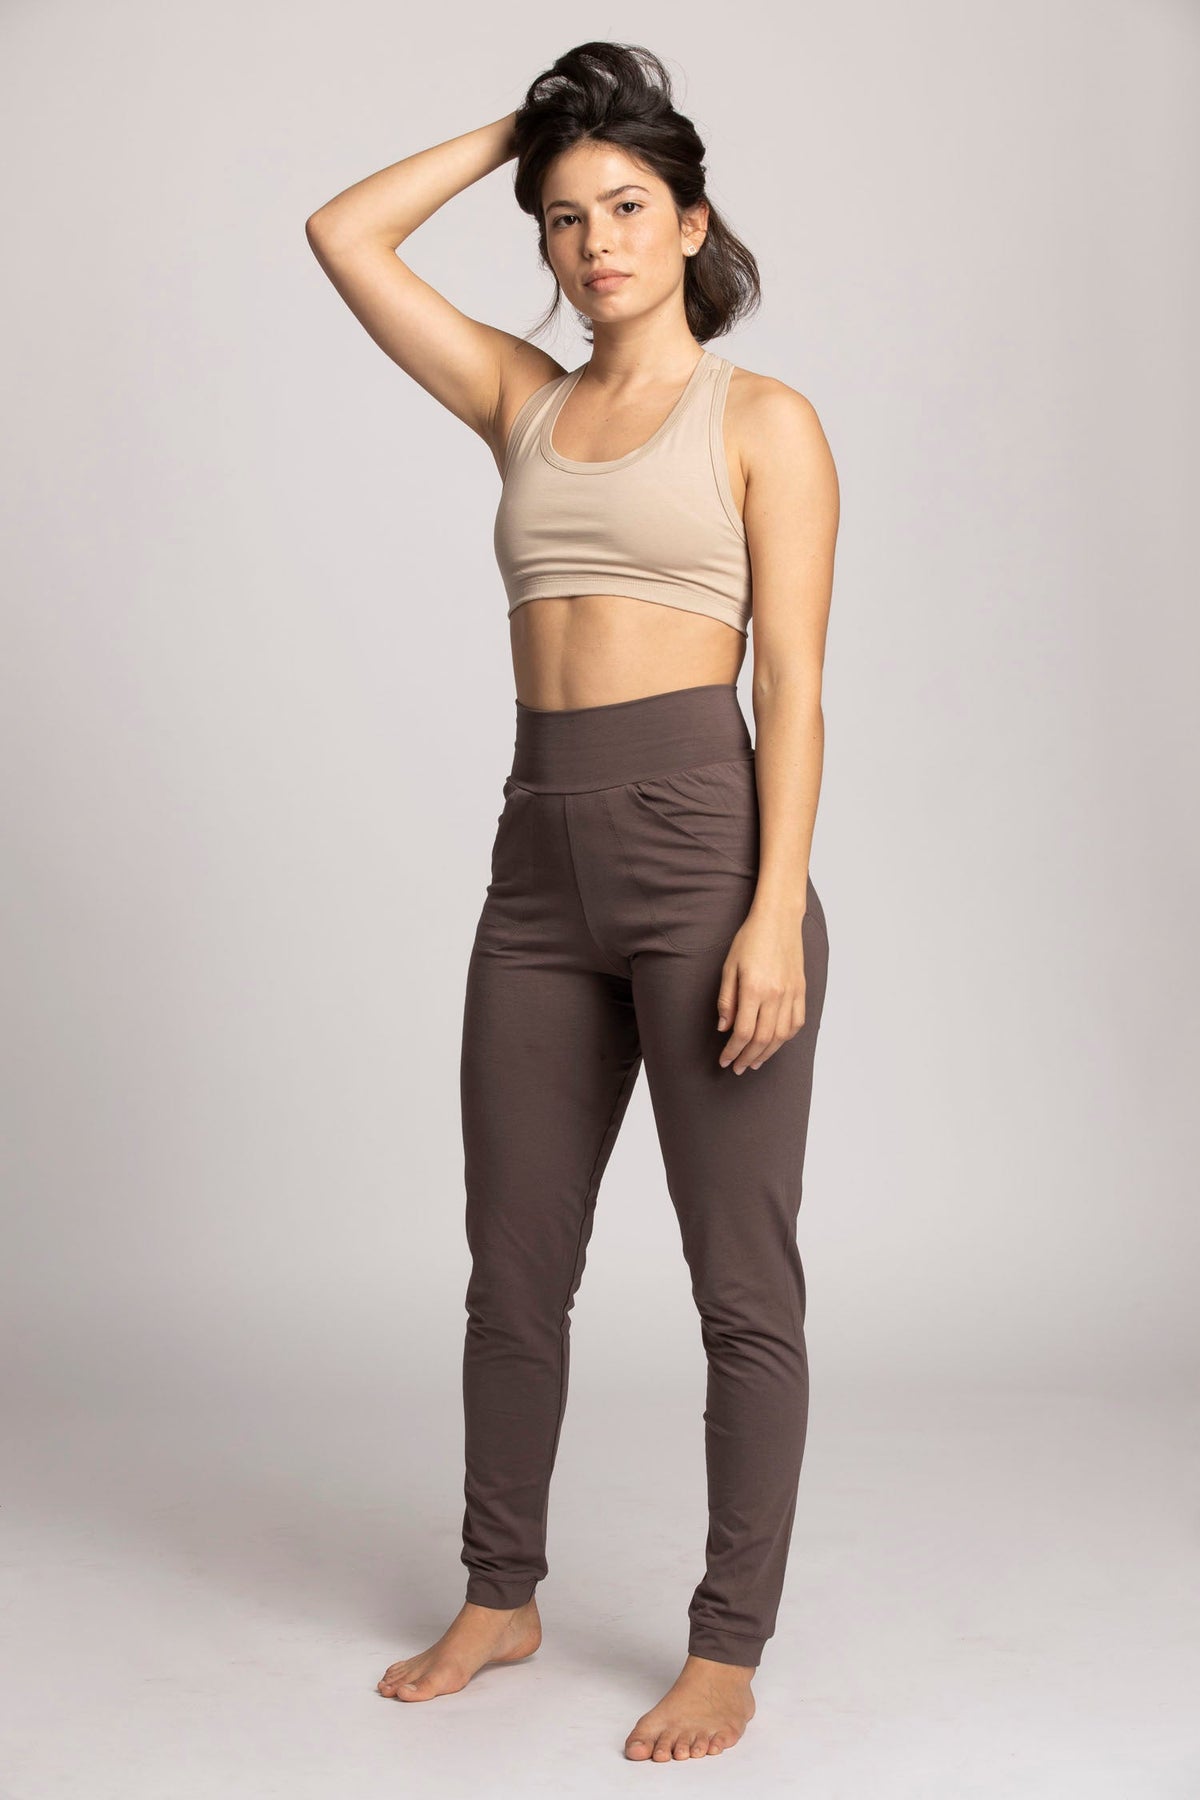 Pecan Slouchy Unisex Yoga Pants womens clothing Ripple Yoga Wear 